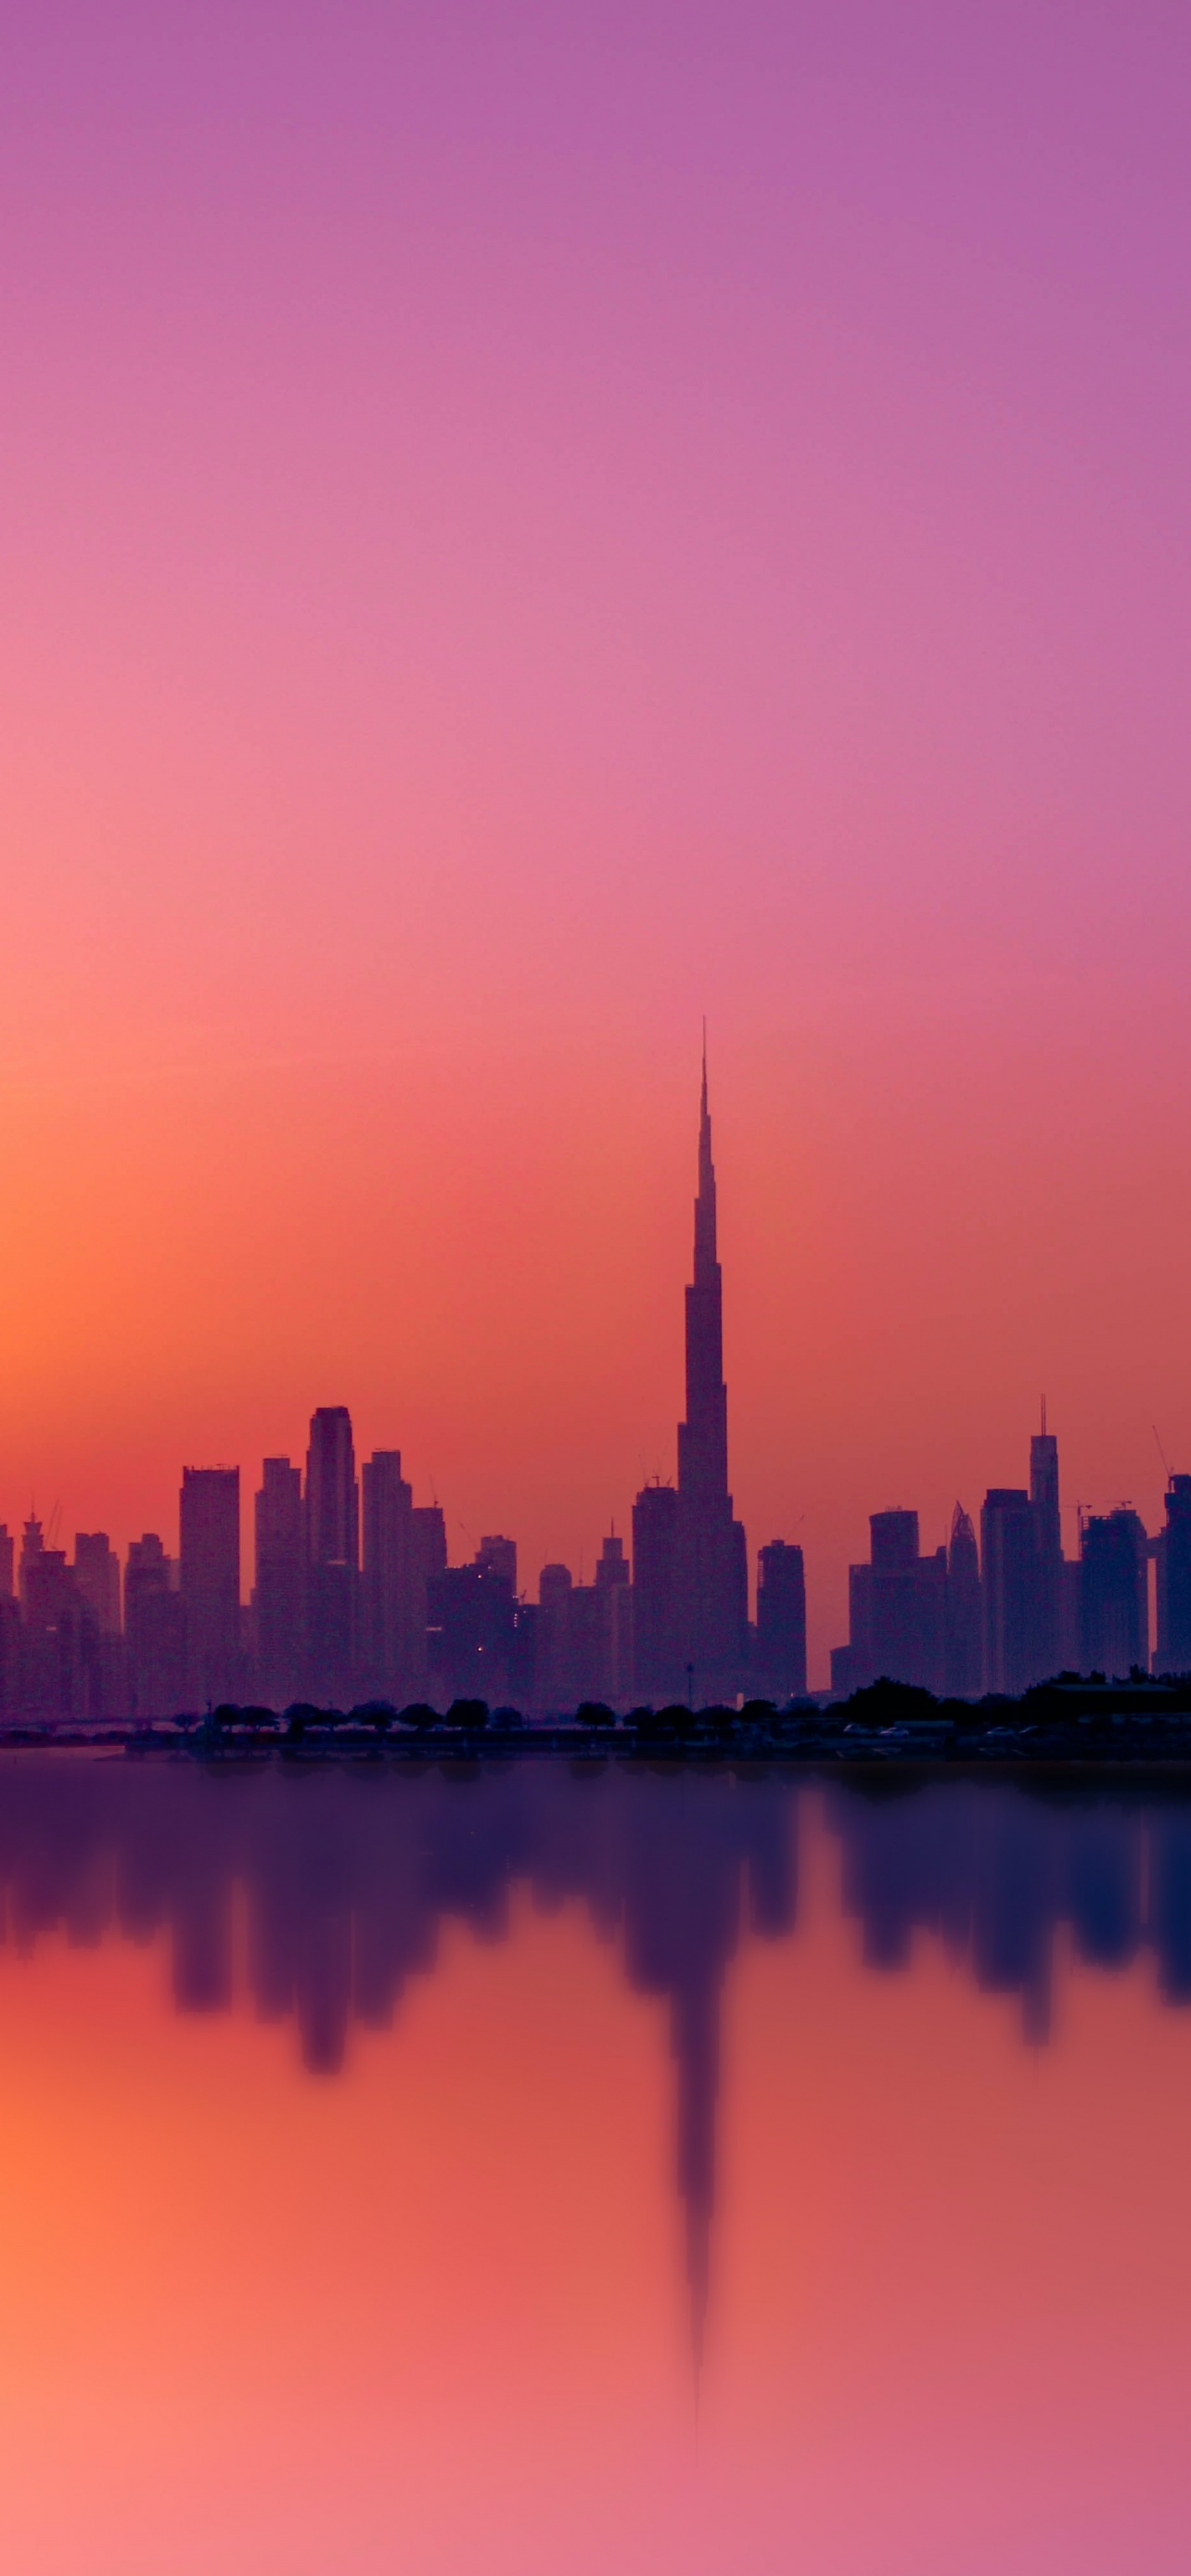 Dubai UAE evening city skyscrapers lights roads 750x1334 iPhone 8766S  wallpaper background picture image